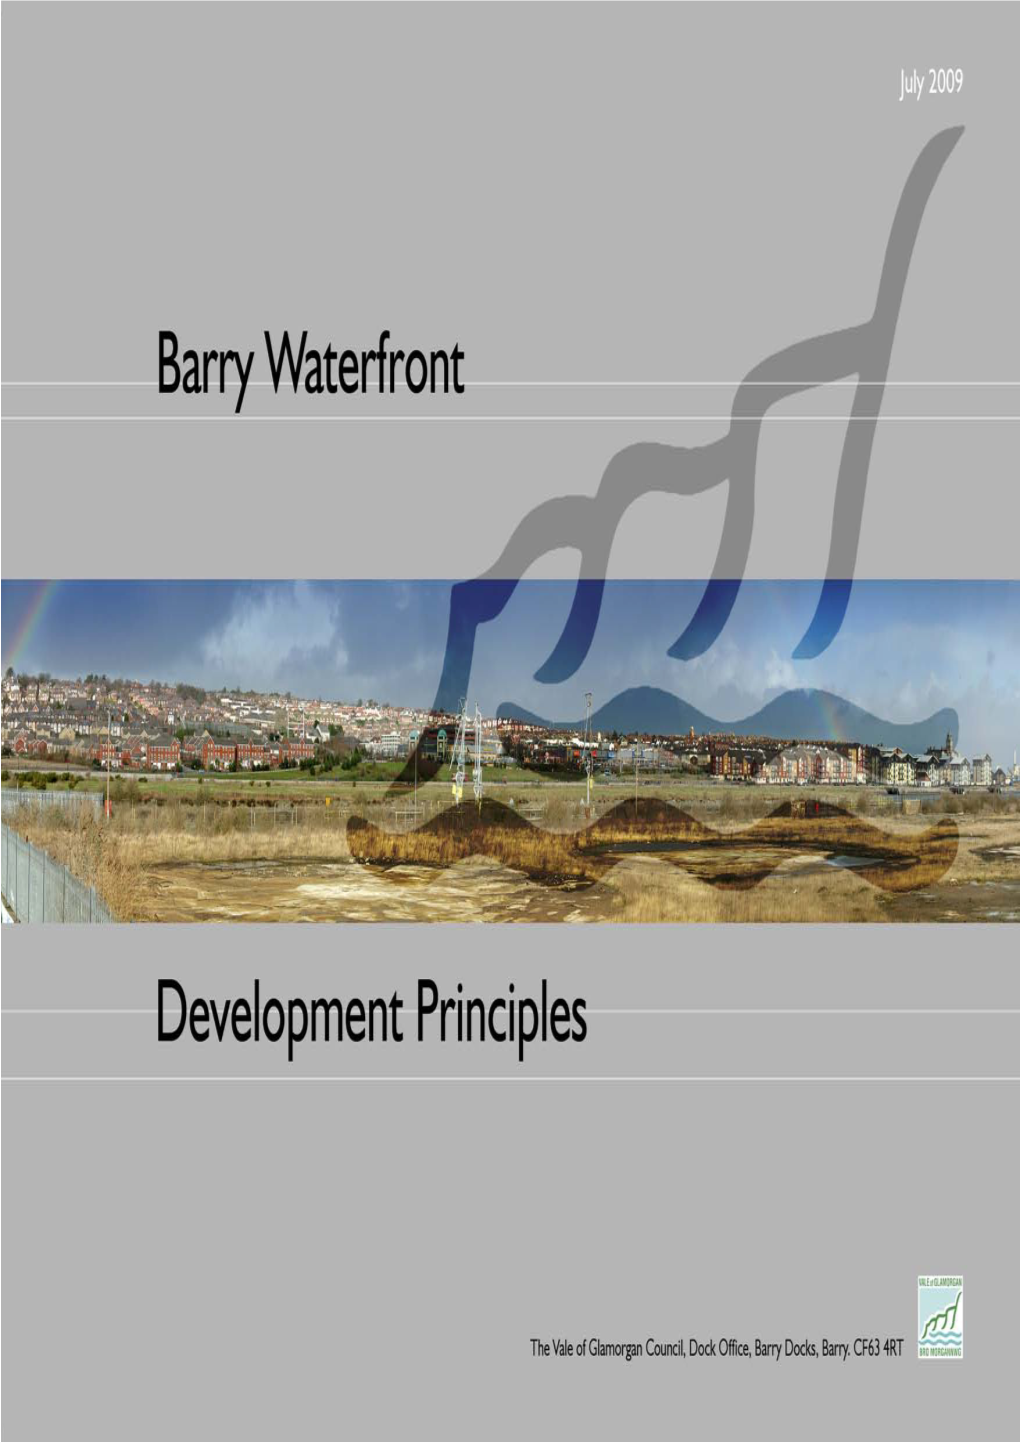 Barry Waterfront Development